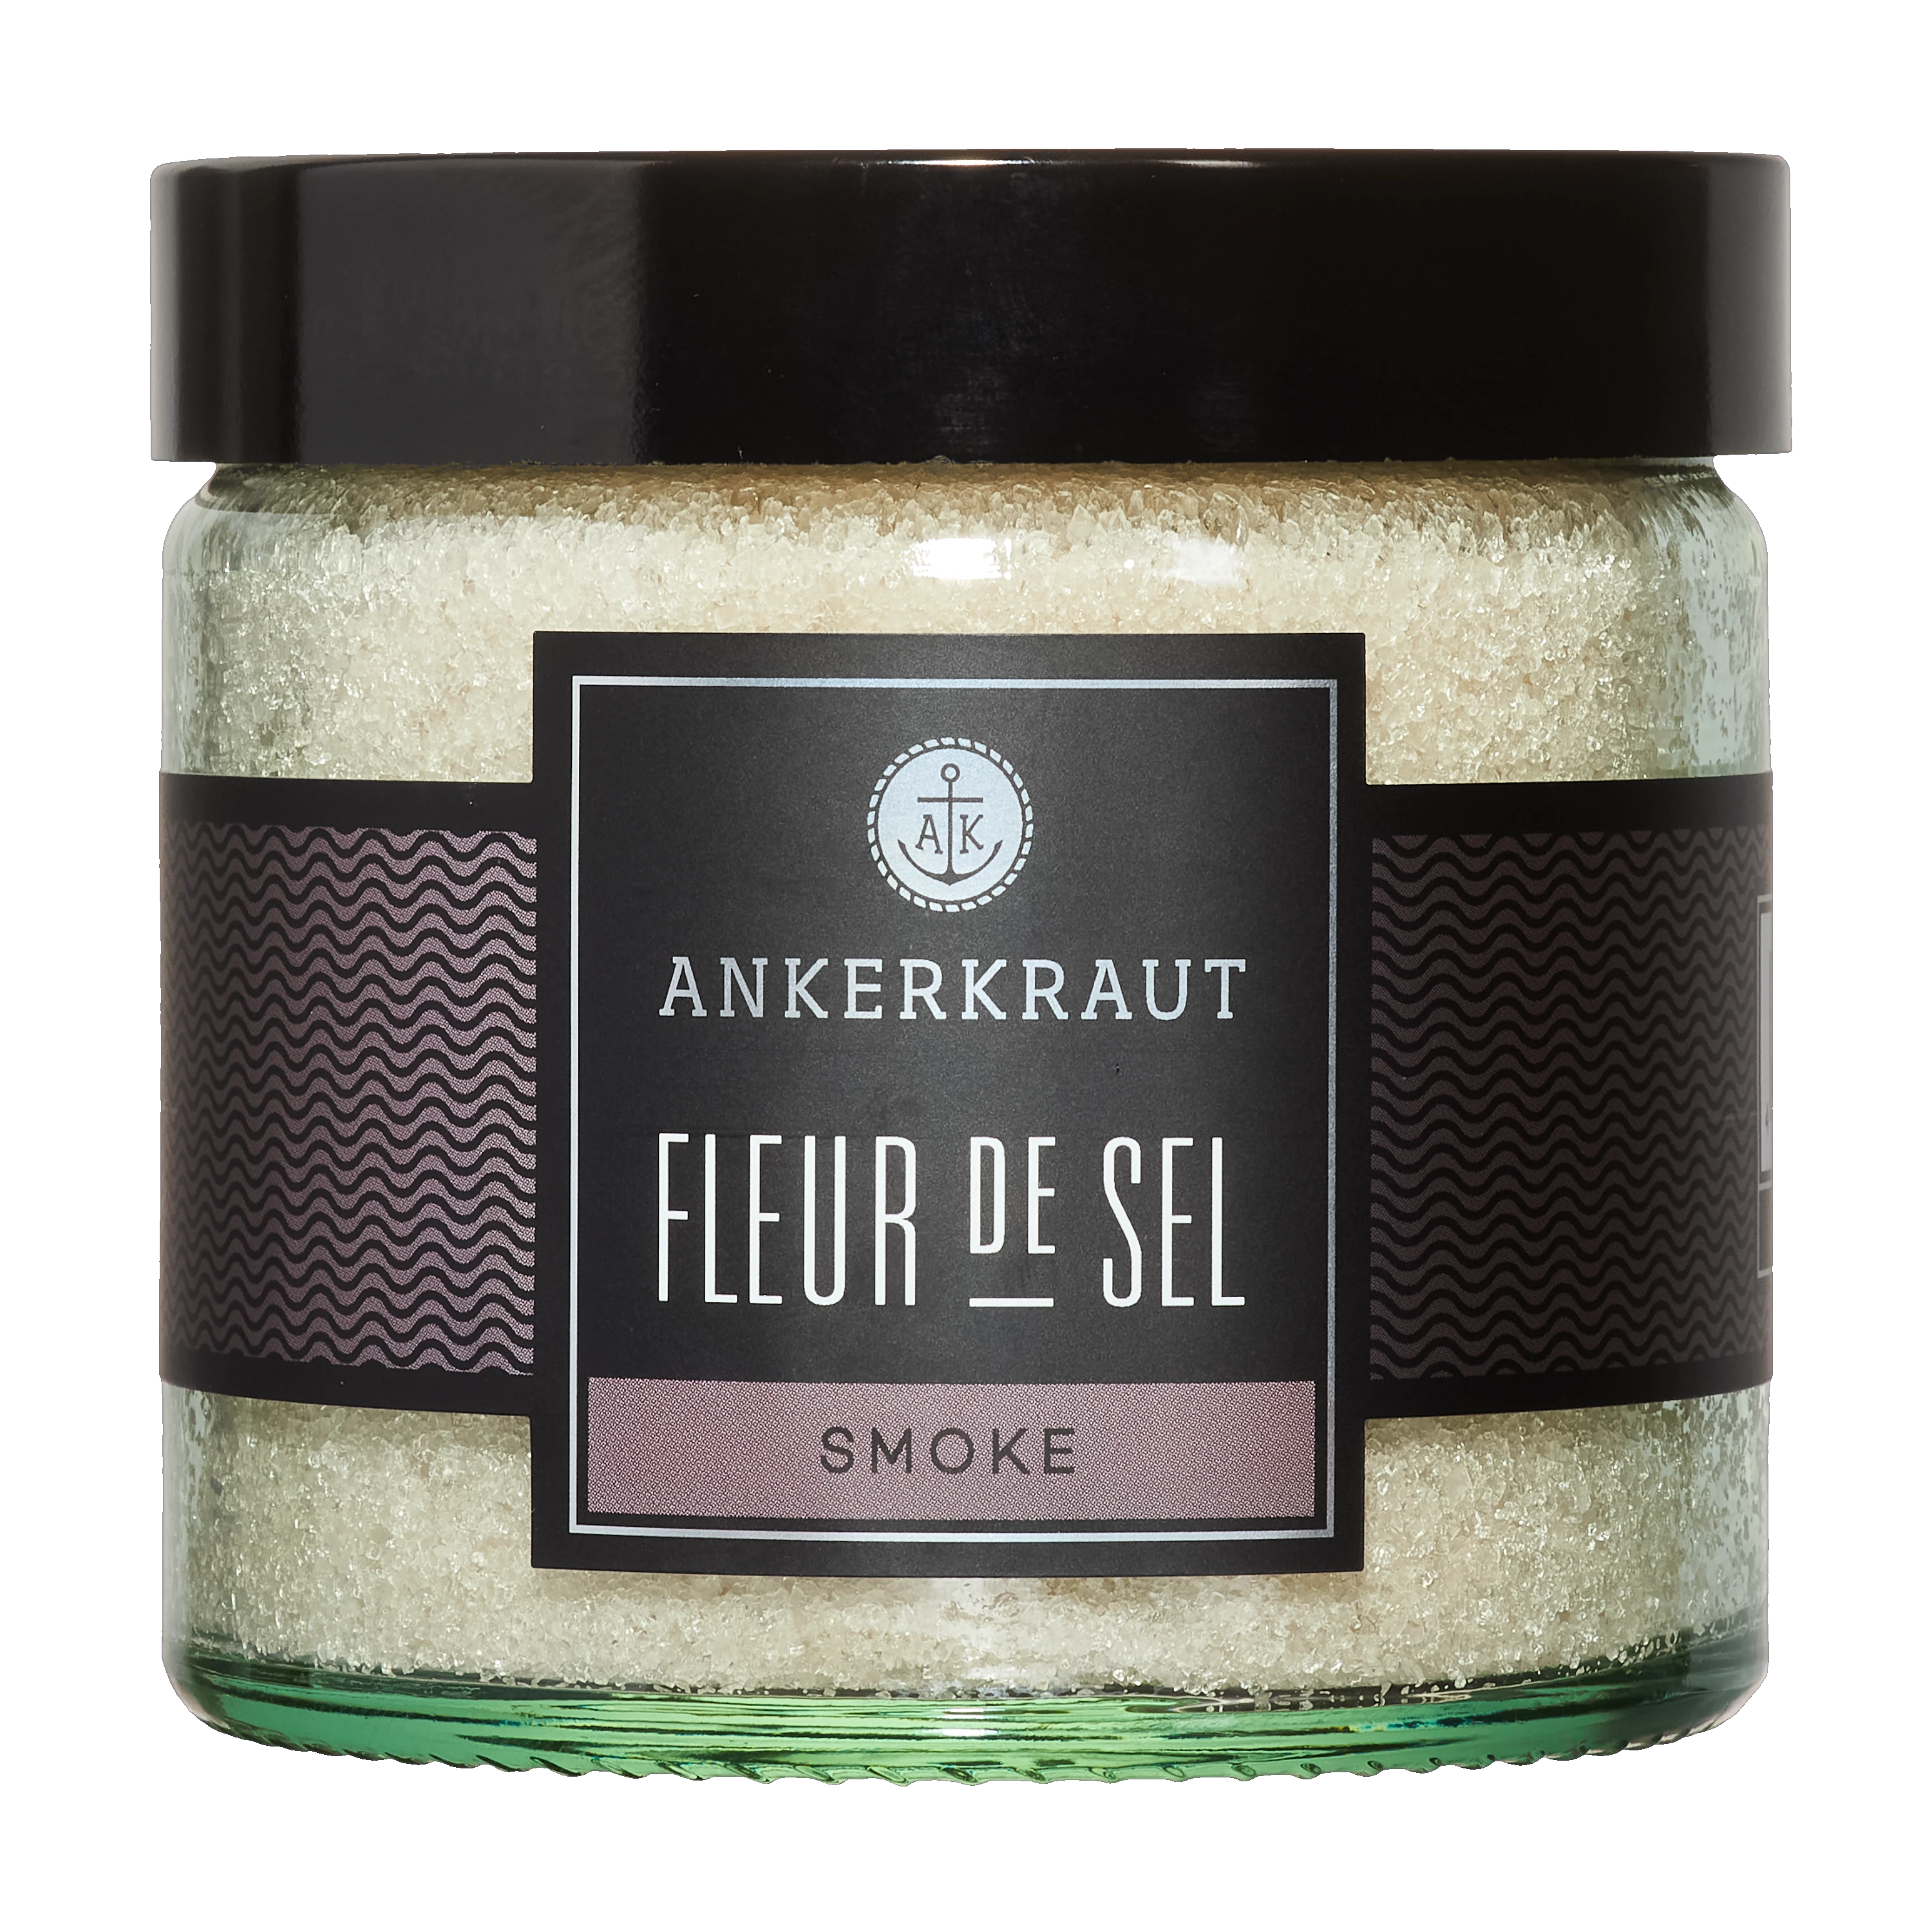 Ankerkraut Fleur De Sel Smoke 1